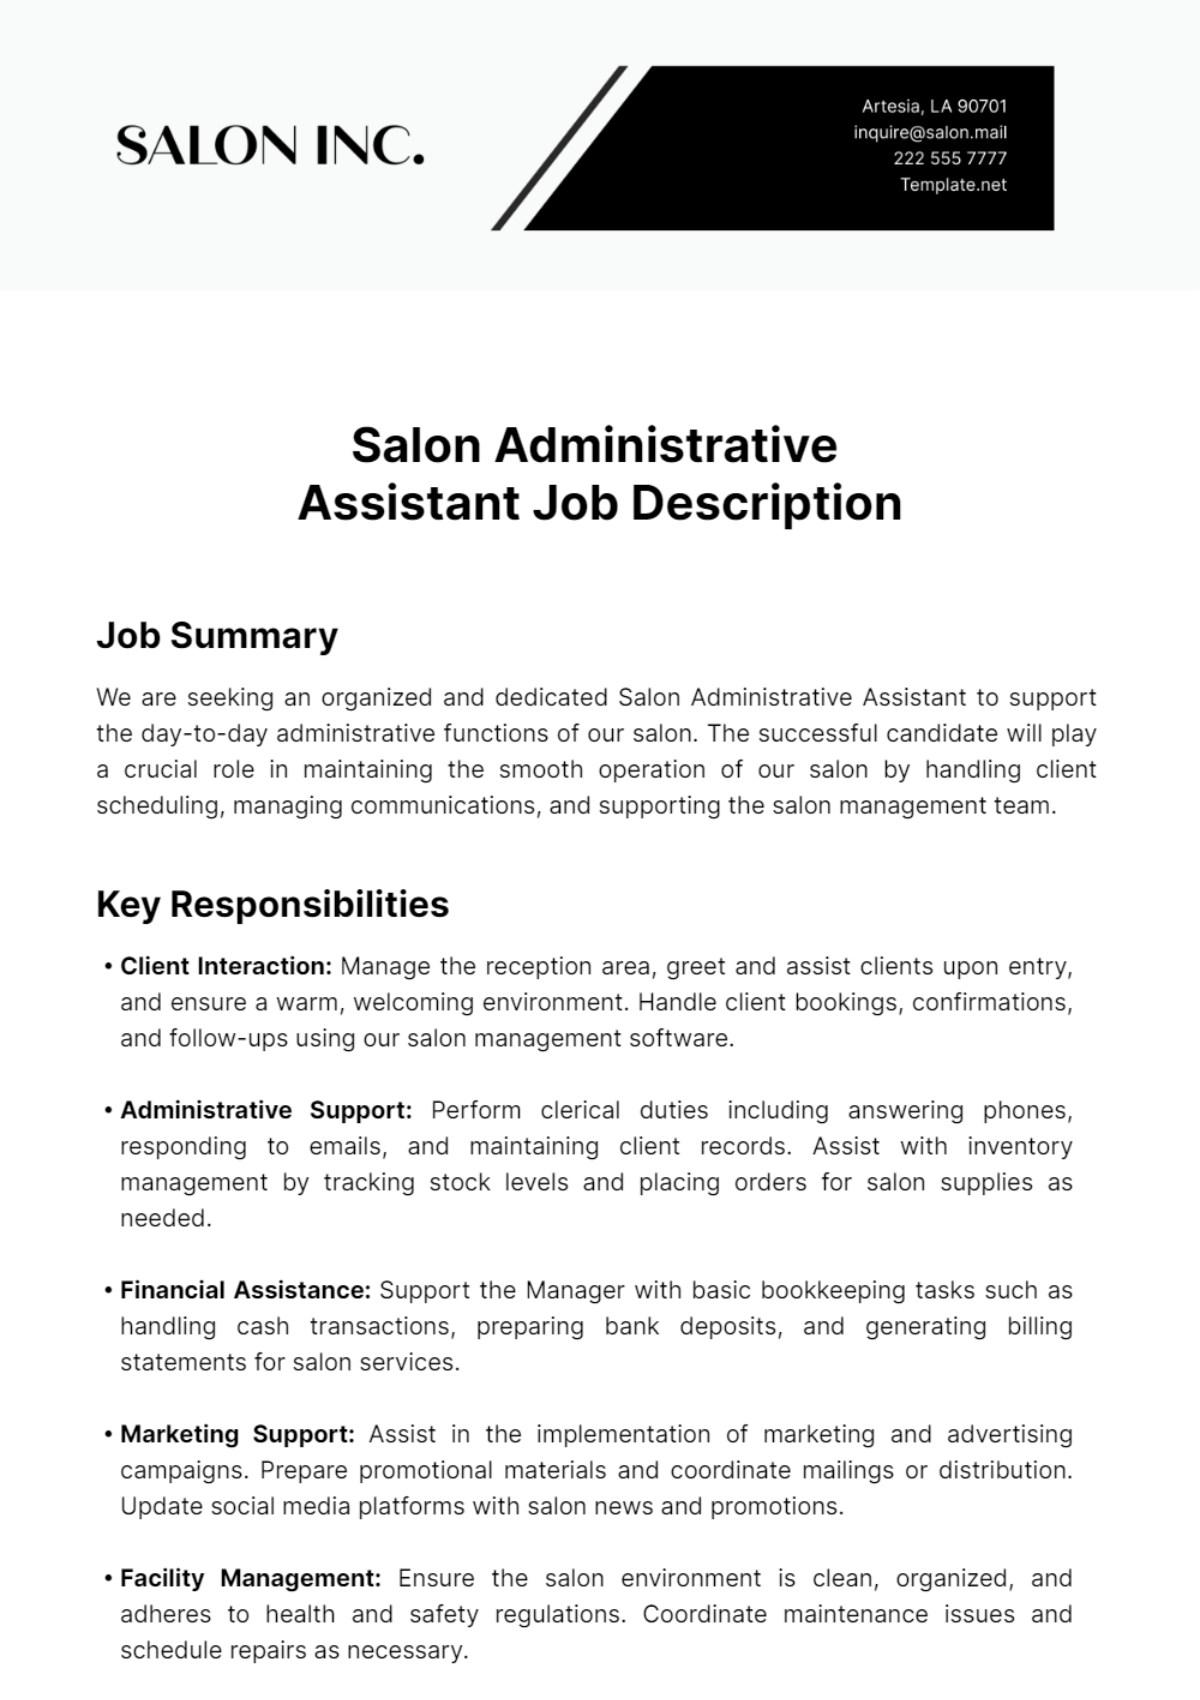 Free Salon Administrative Assistant Job Description Template